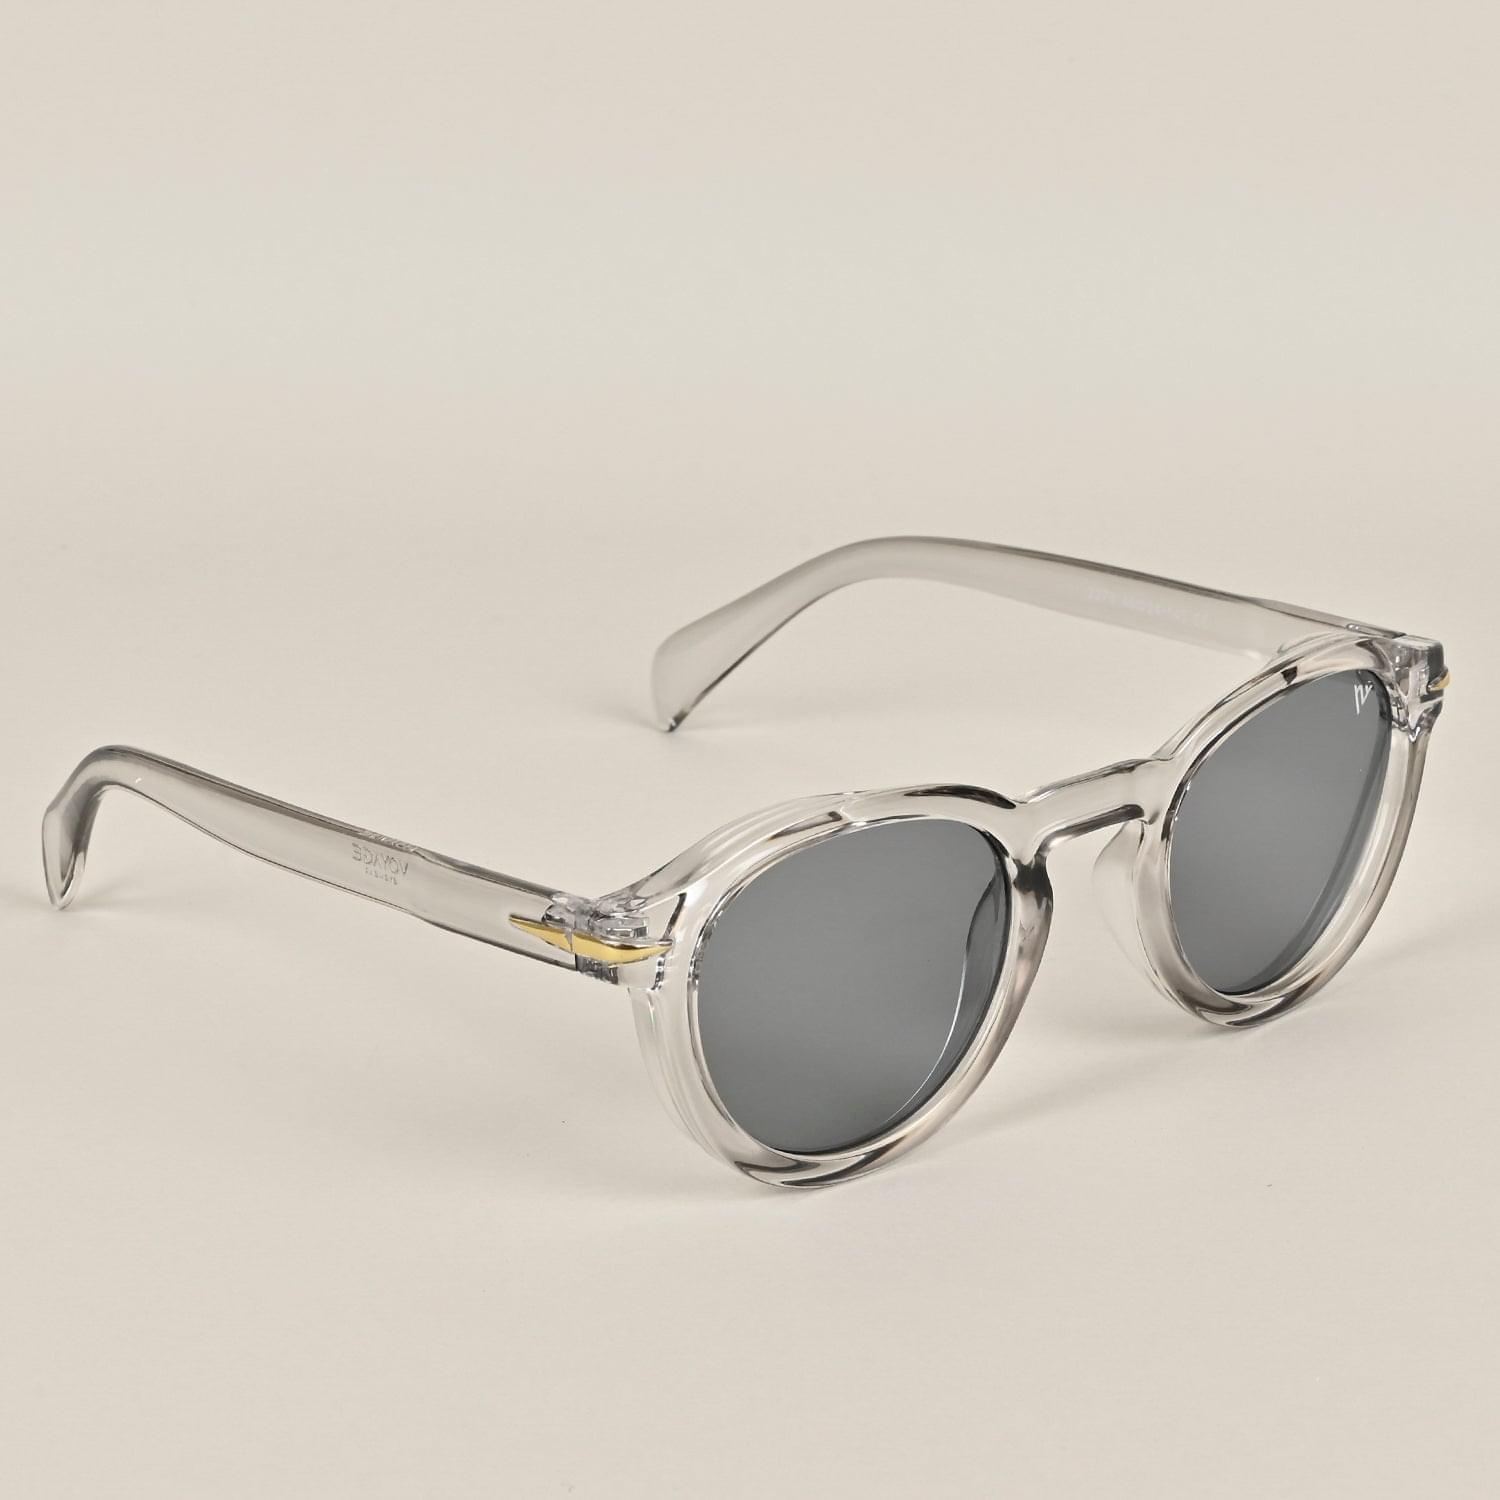 Voyage Crystal Round Sunglasses - MG3608